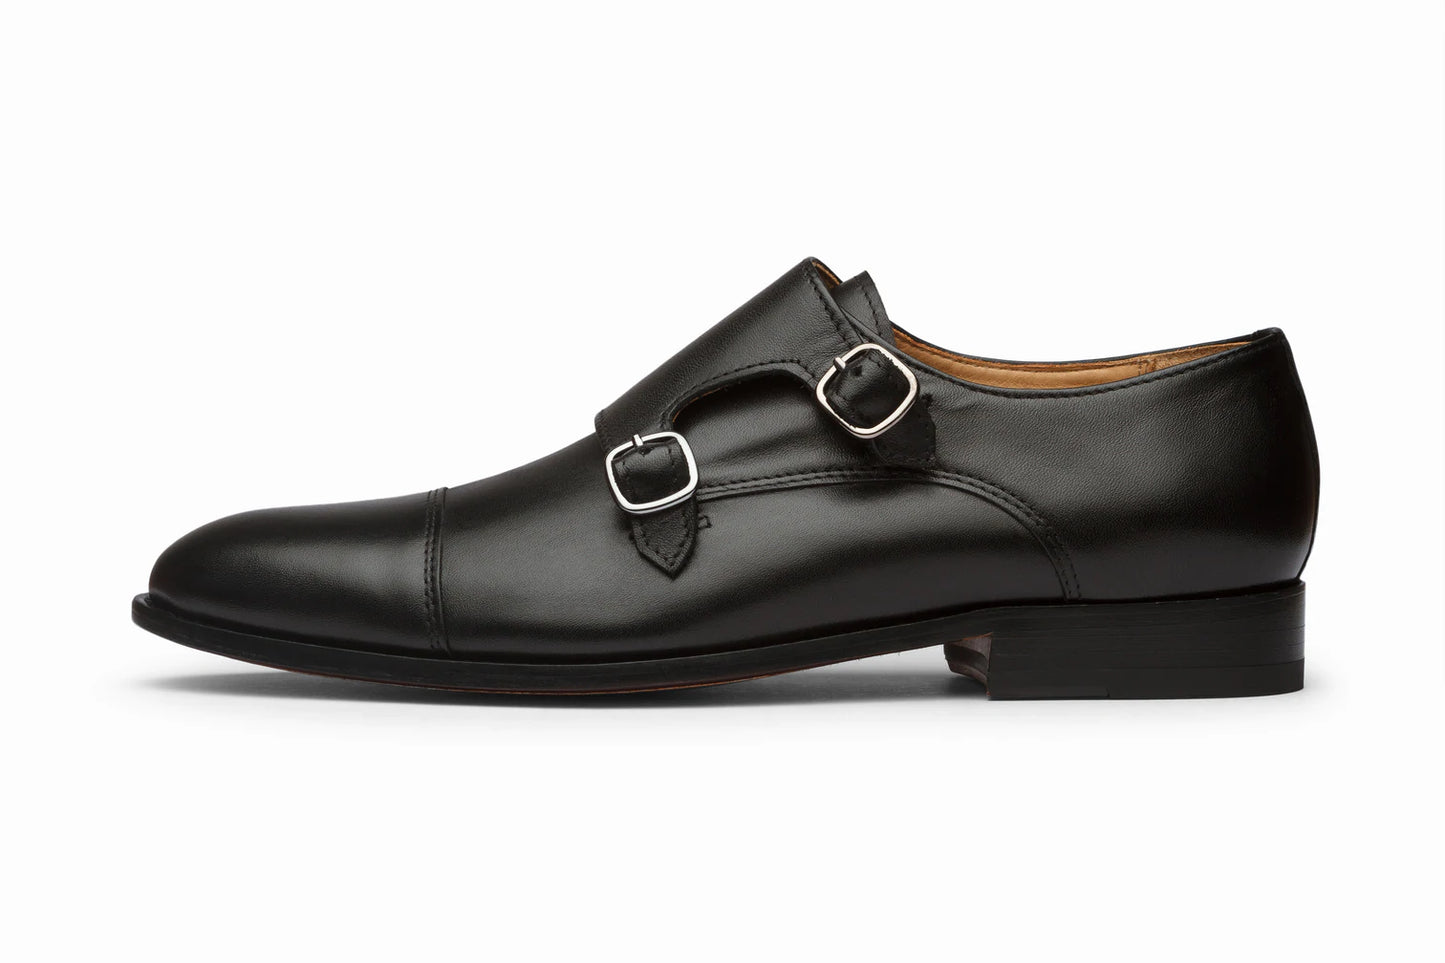 Toe cap double monks black, formal shoes for men in Dubai.